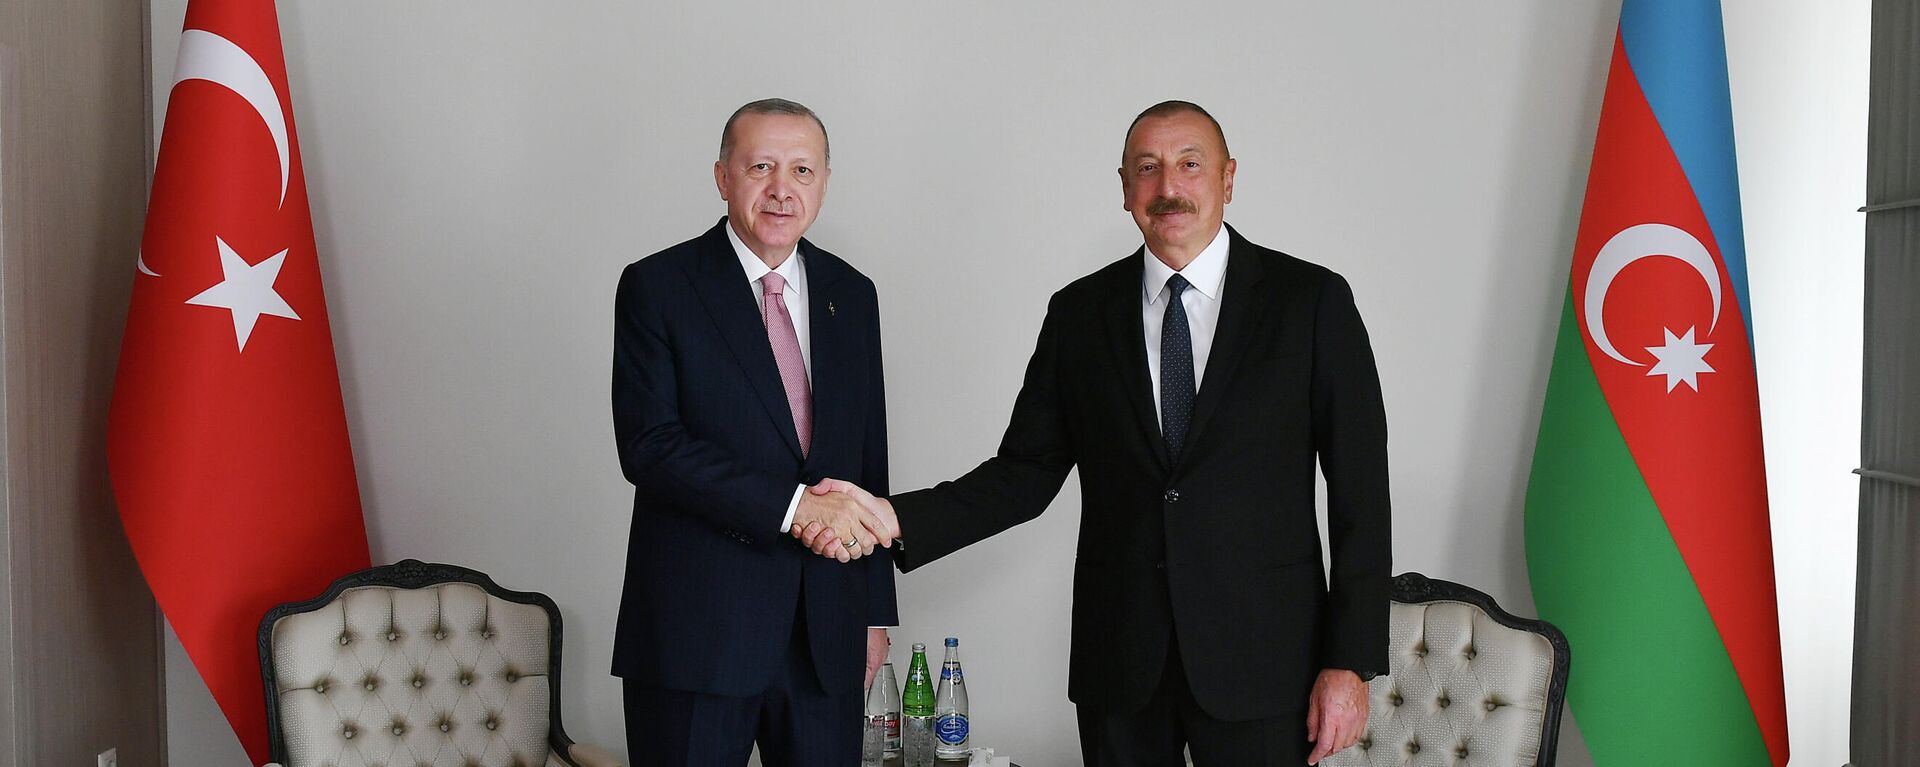 Recep Tayyip Erdogan, el presidente de Turquía (izqda.), con su homólogo azerí, Ilham Iliyev  (dcha.)  - Sputnik Mundo, 1920, 16.06.2021